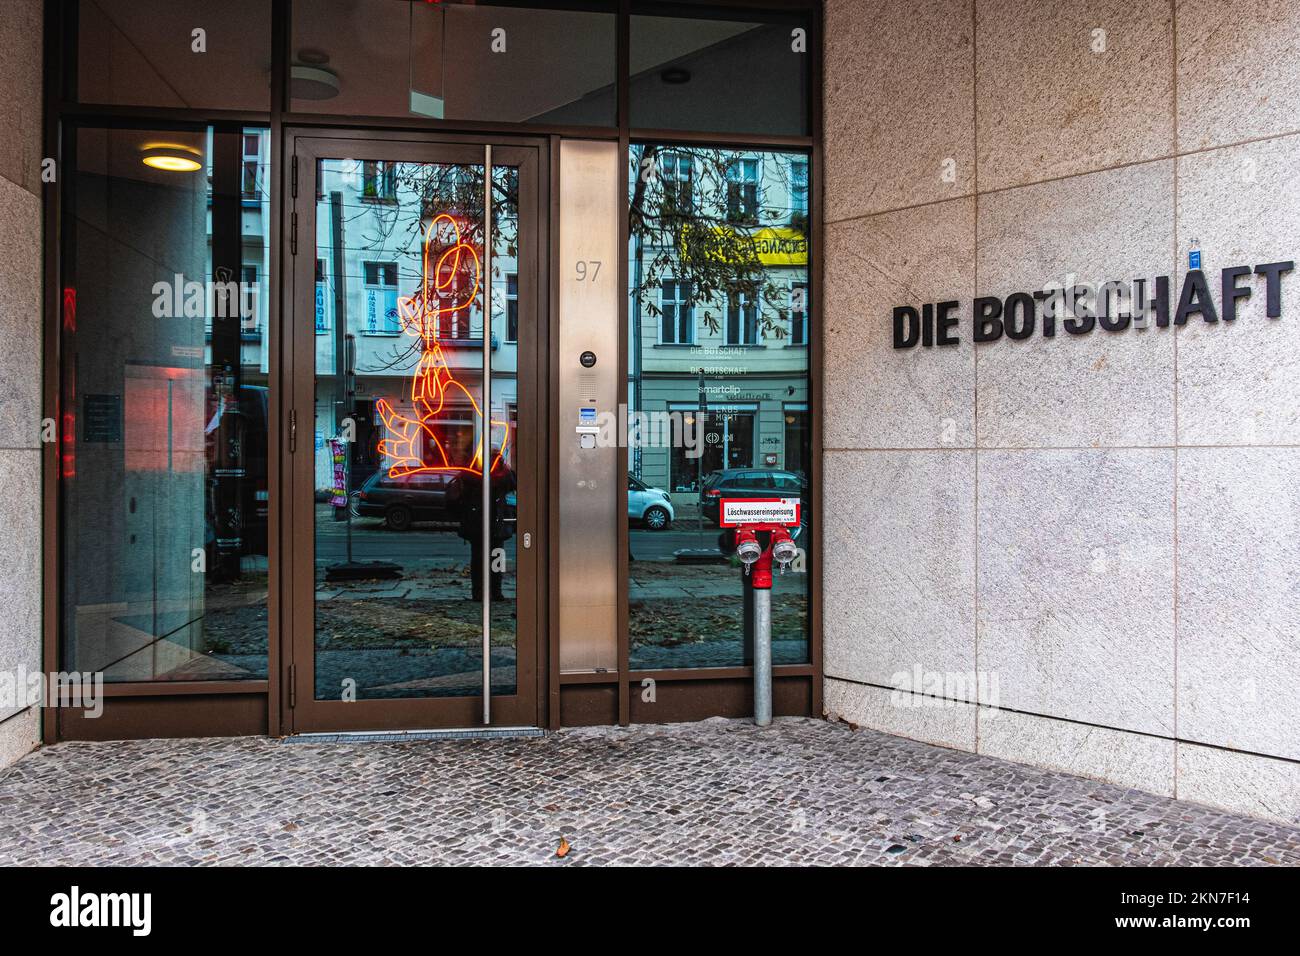 Die Botschaft, Company works on Brand transformation, Kastanienallee 97, Prenzlauer Berg, Berlin Stock Photo